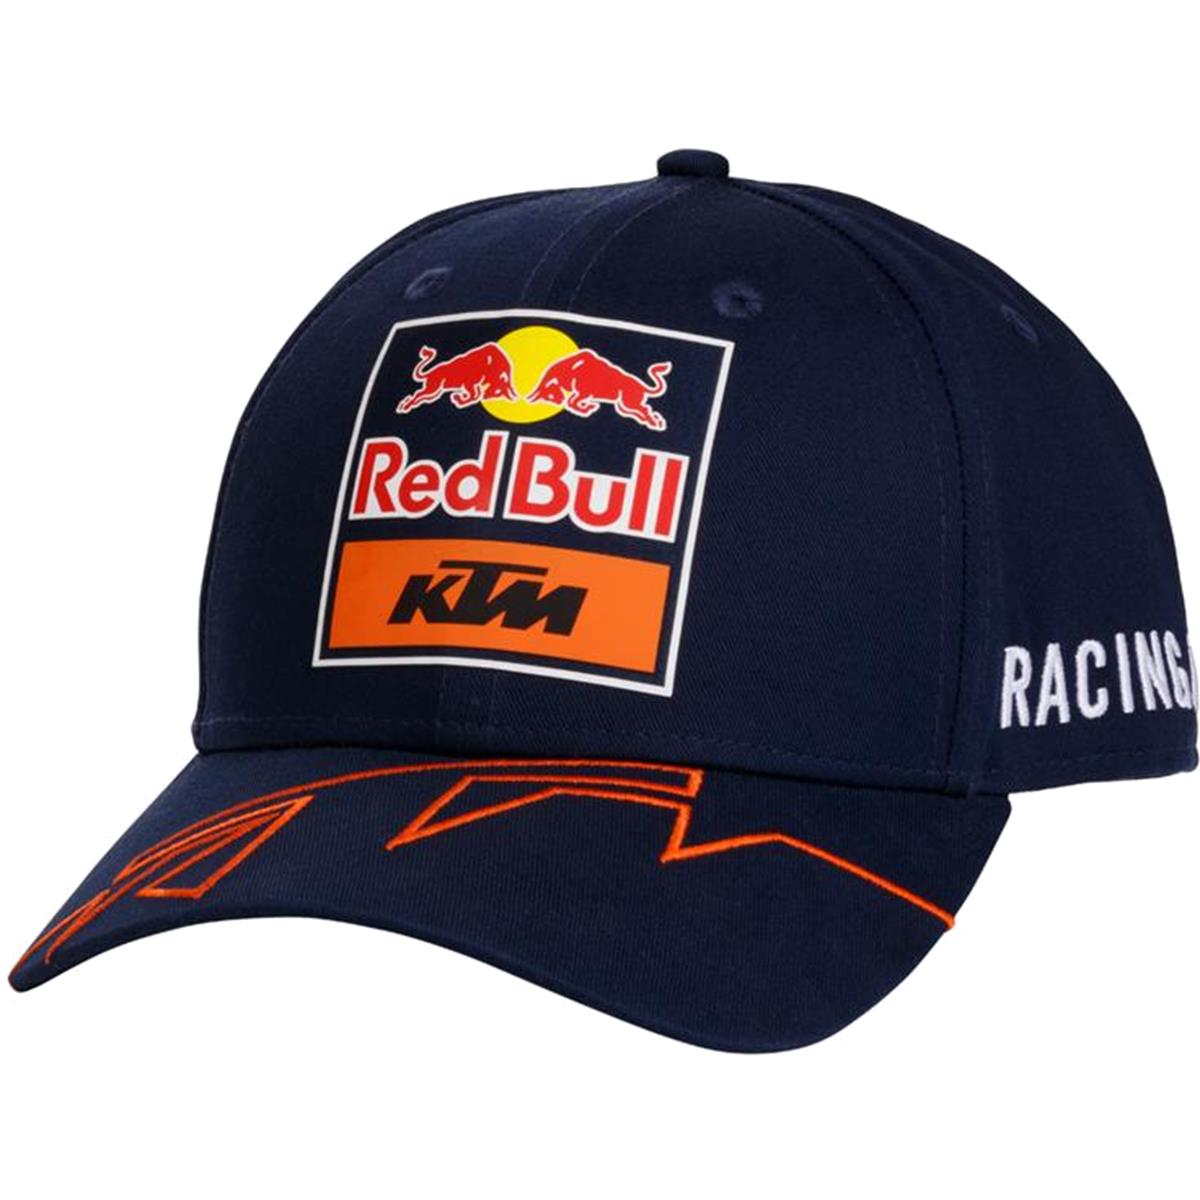 Red Bull Kids Strapback Cap KTM New Era OTL Navy/Orange